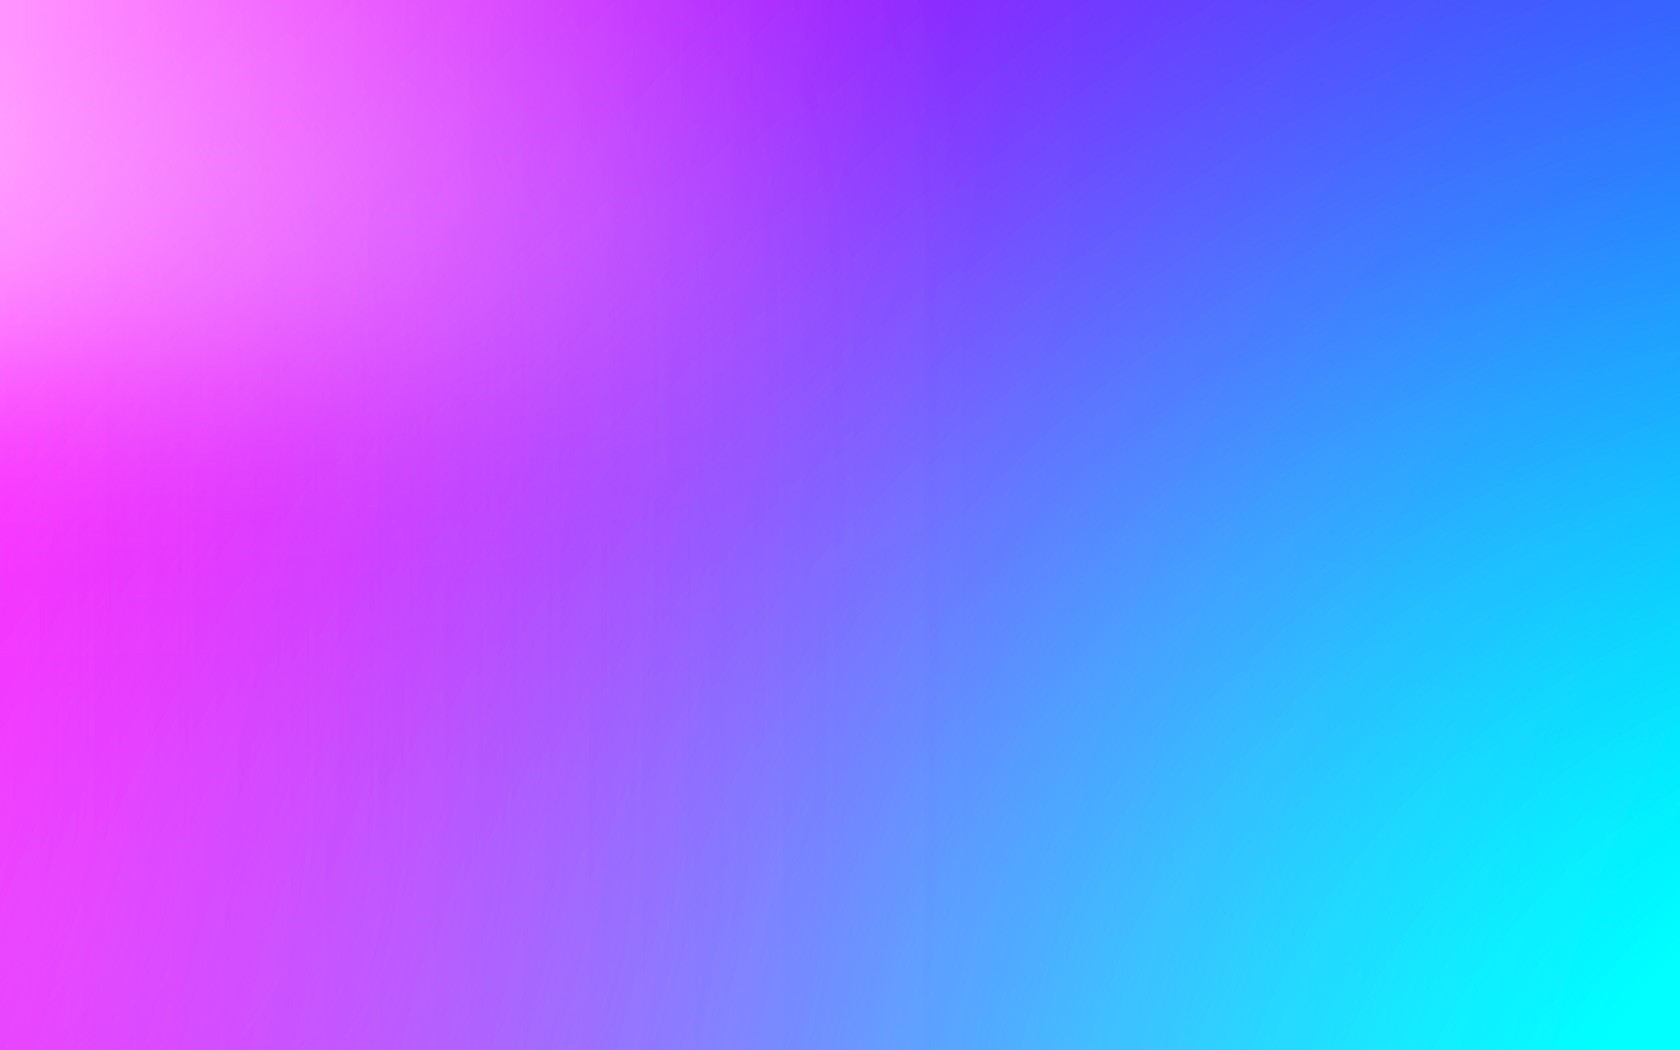 1680x1050 simple colorful abstract gradient lightning easter sky wallpaper JPG 72 kB Gallery HD Wallpaper